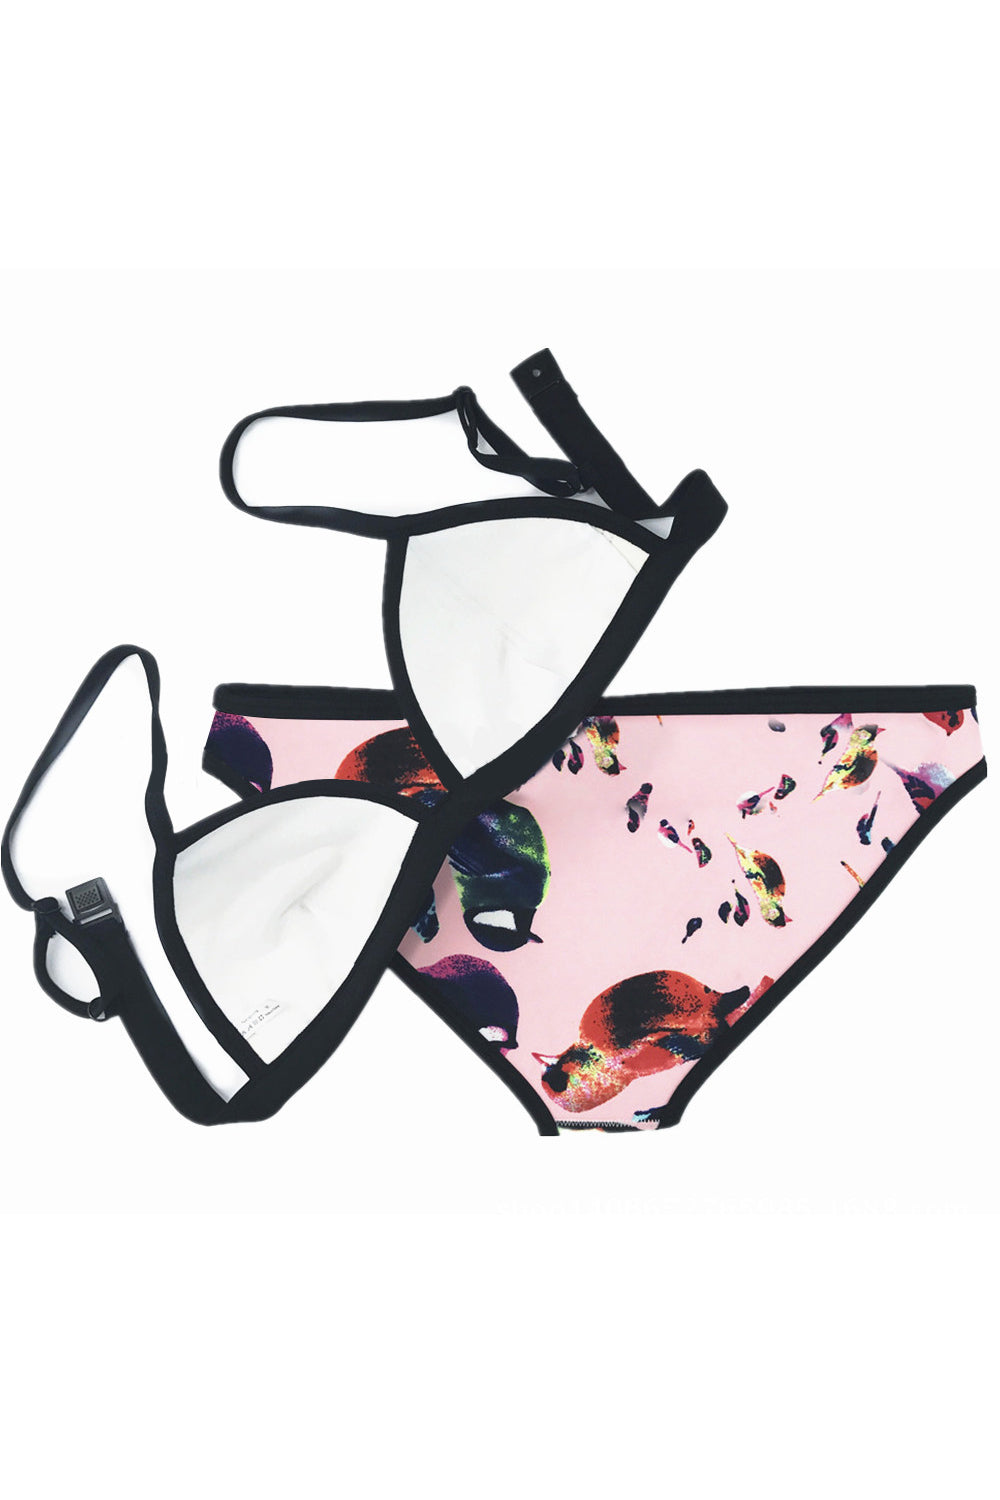 Iyasson Triangle top with Floral Printing Neoprene Bikini Set